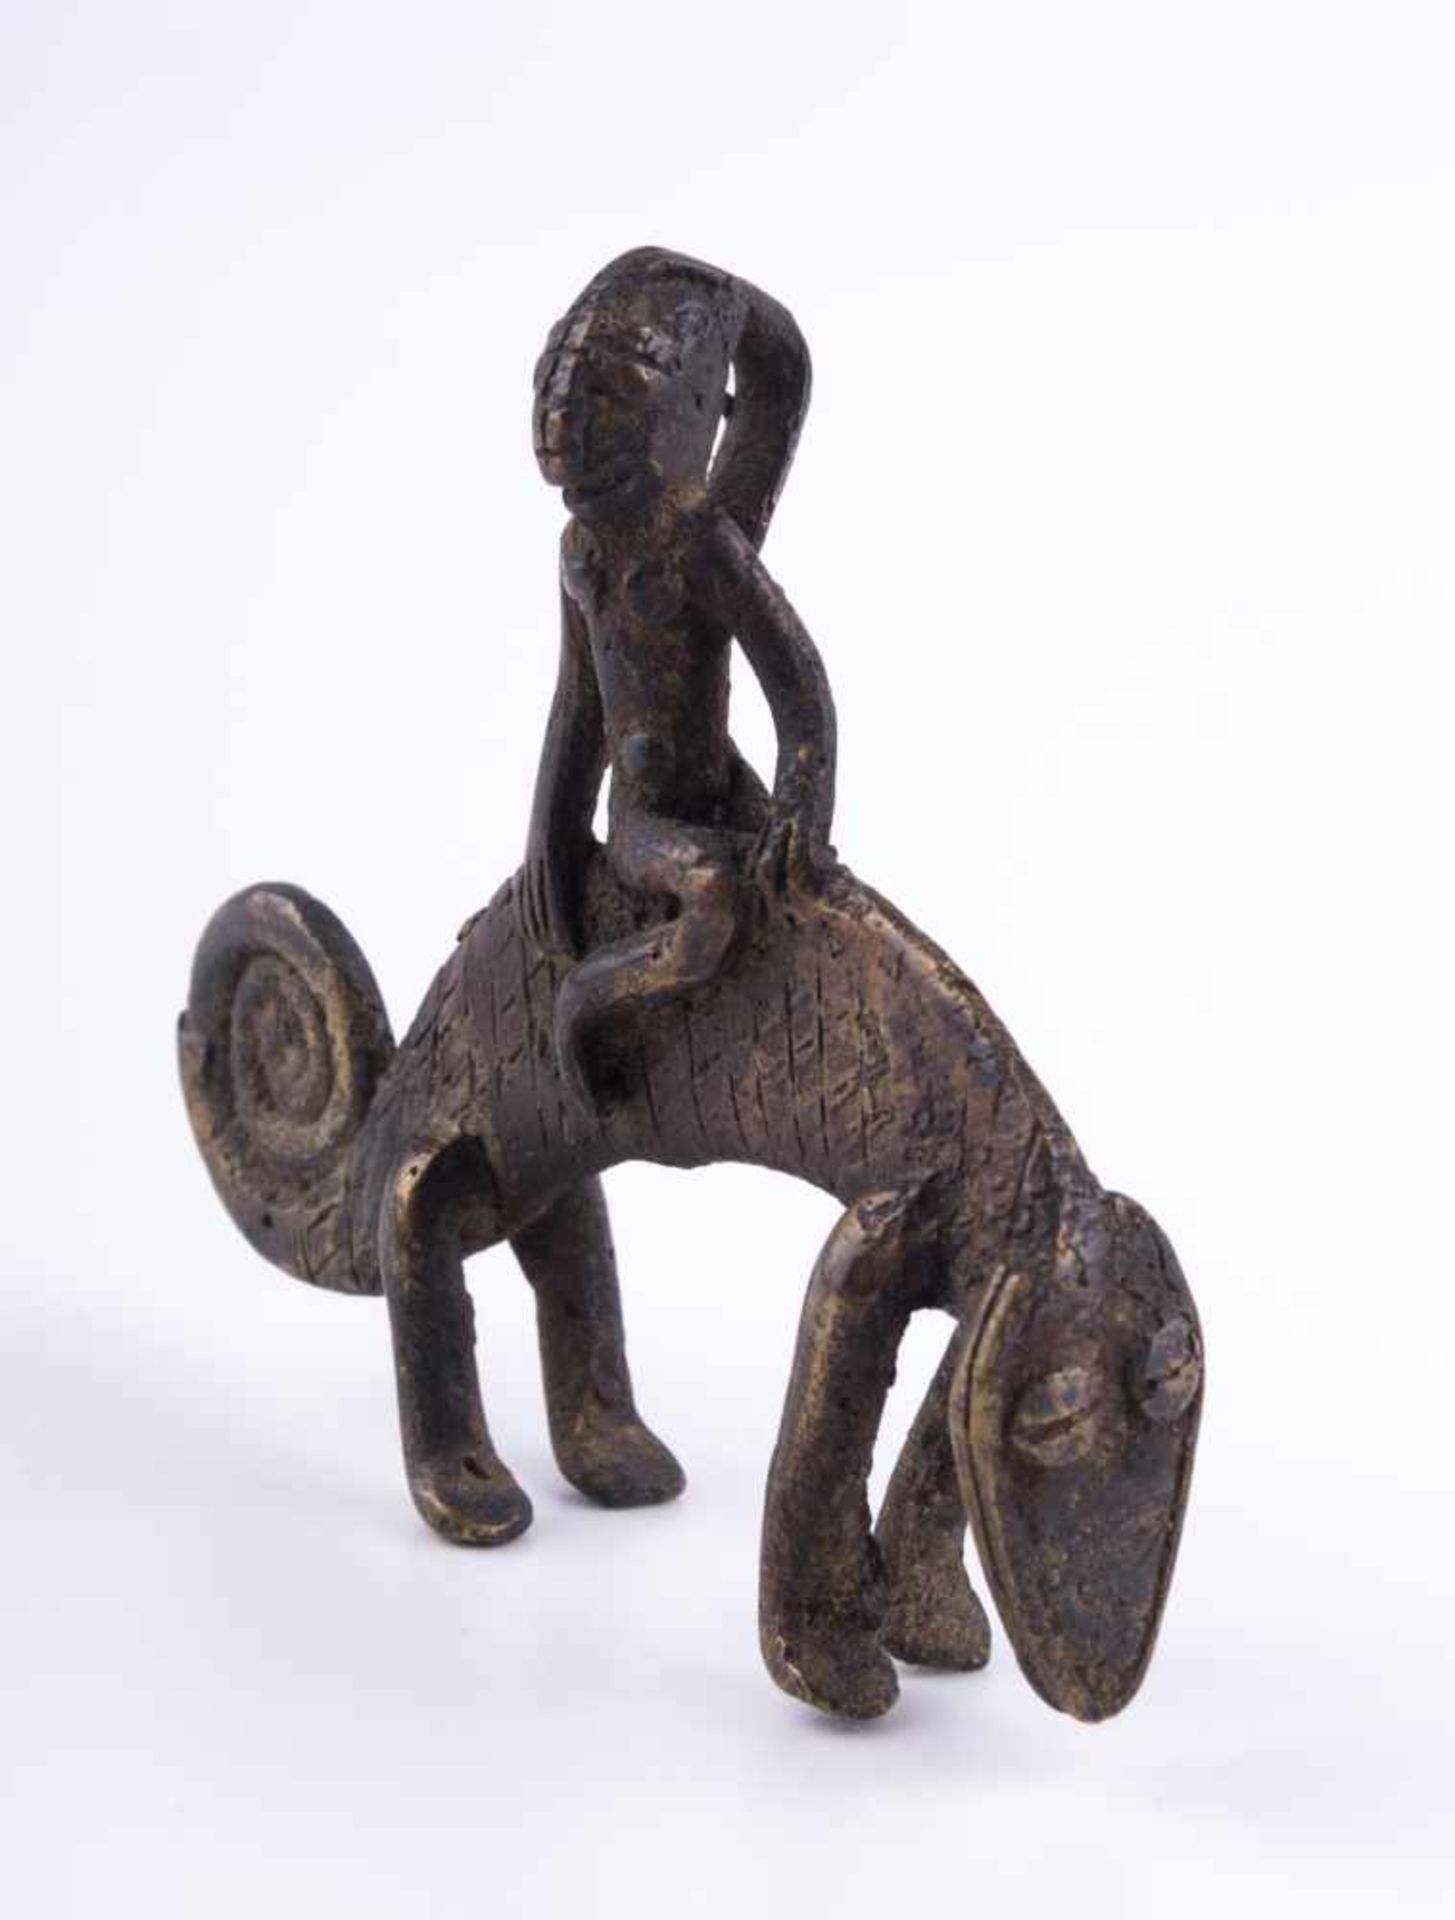 Ashanti Figur Afrika um 1900 / Ashanti figure, Africa about 1900 Goldgewicht, Bronze, 62 mm x 72 mm, - Bild 3 aus 3